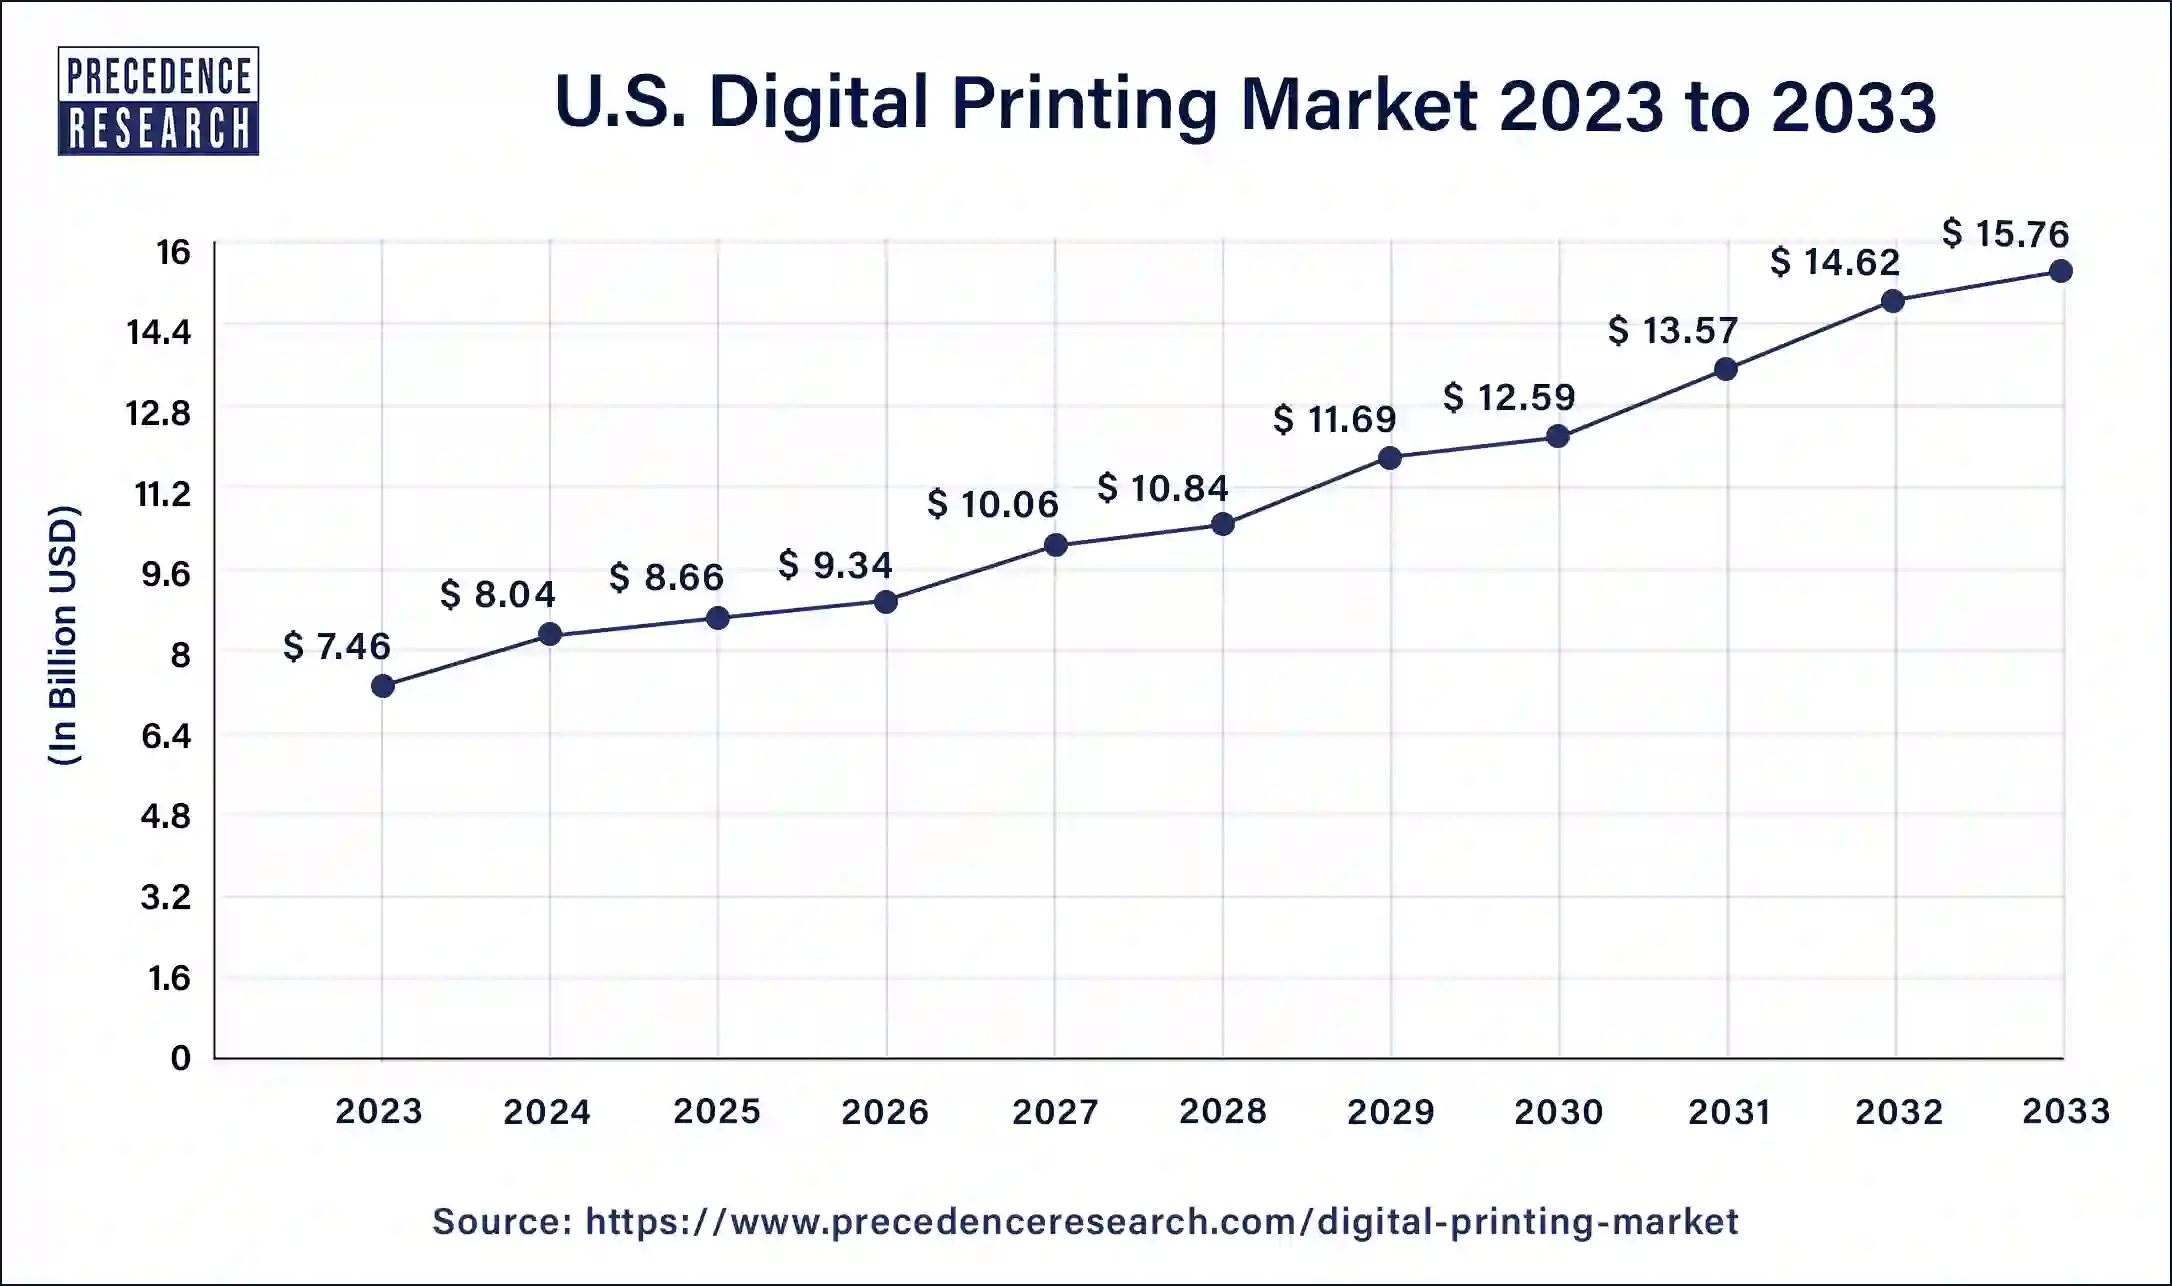 U.S. Digital Printing Market Size 2024 to 2033